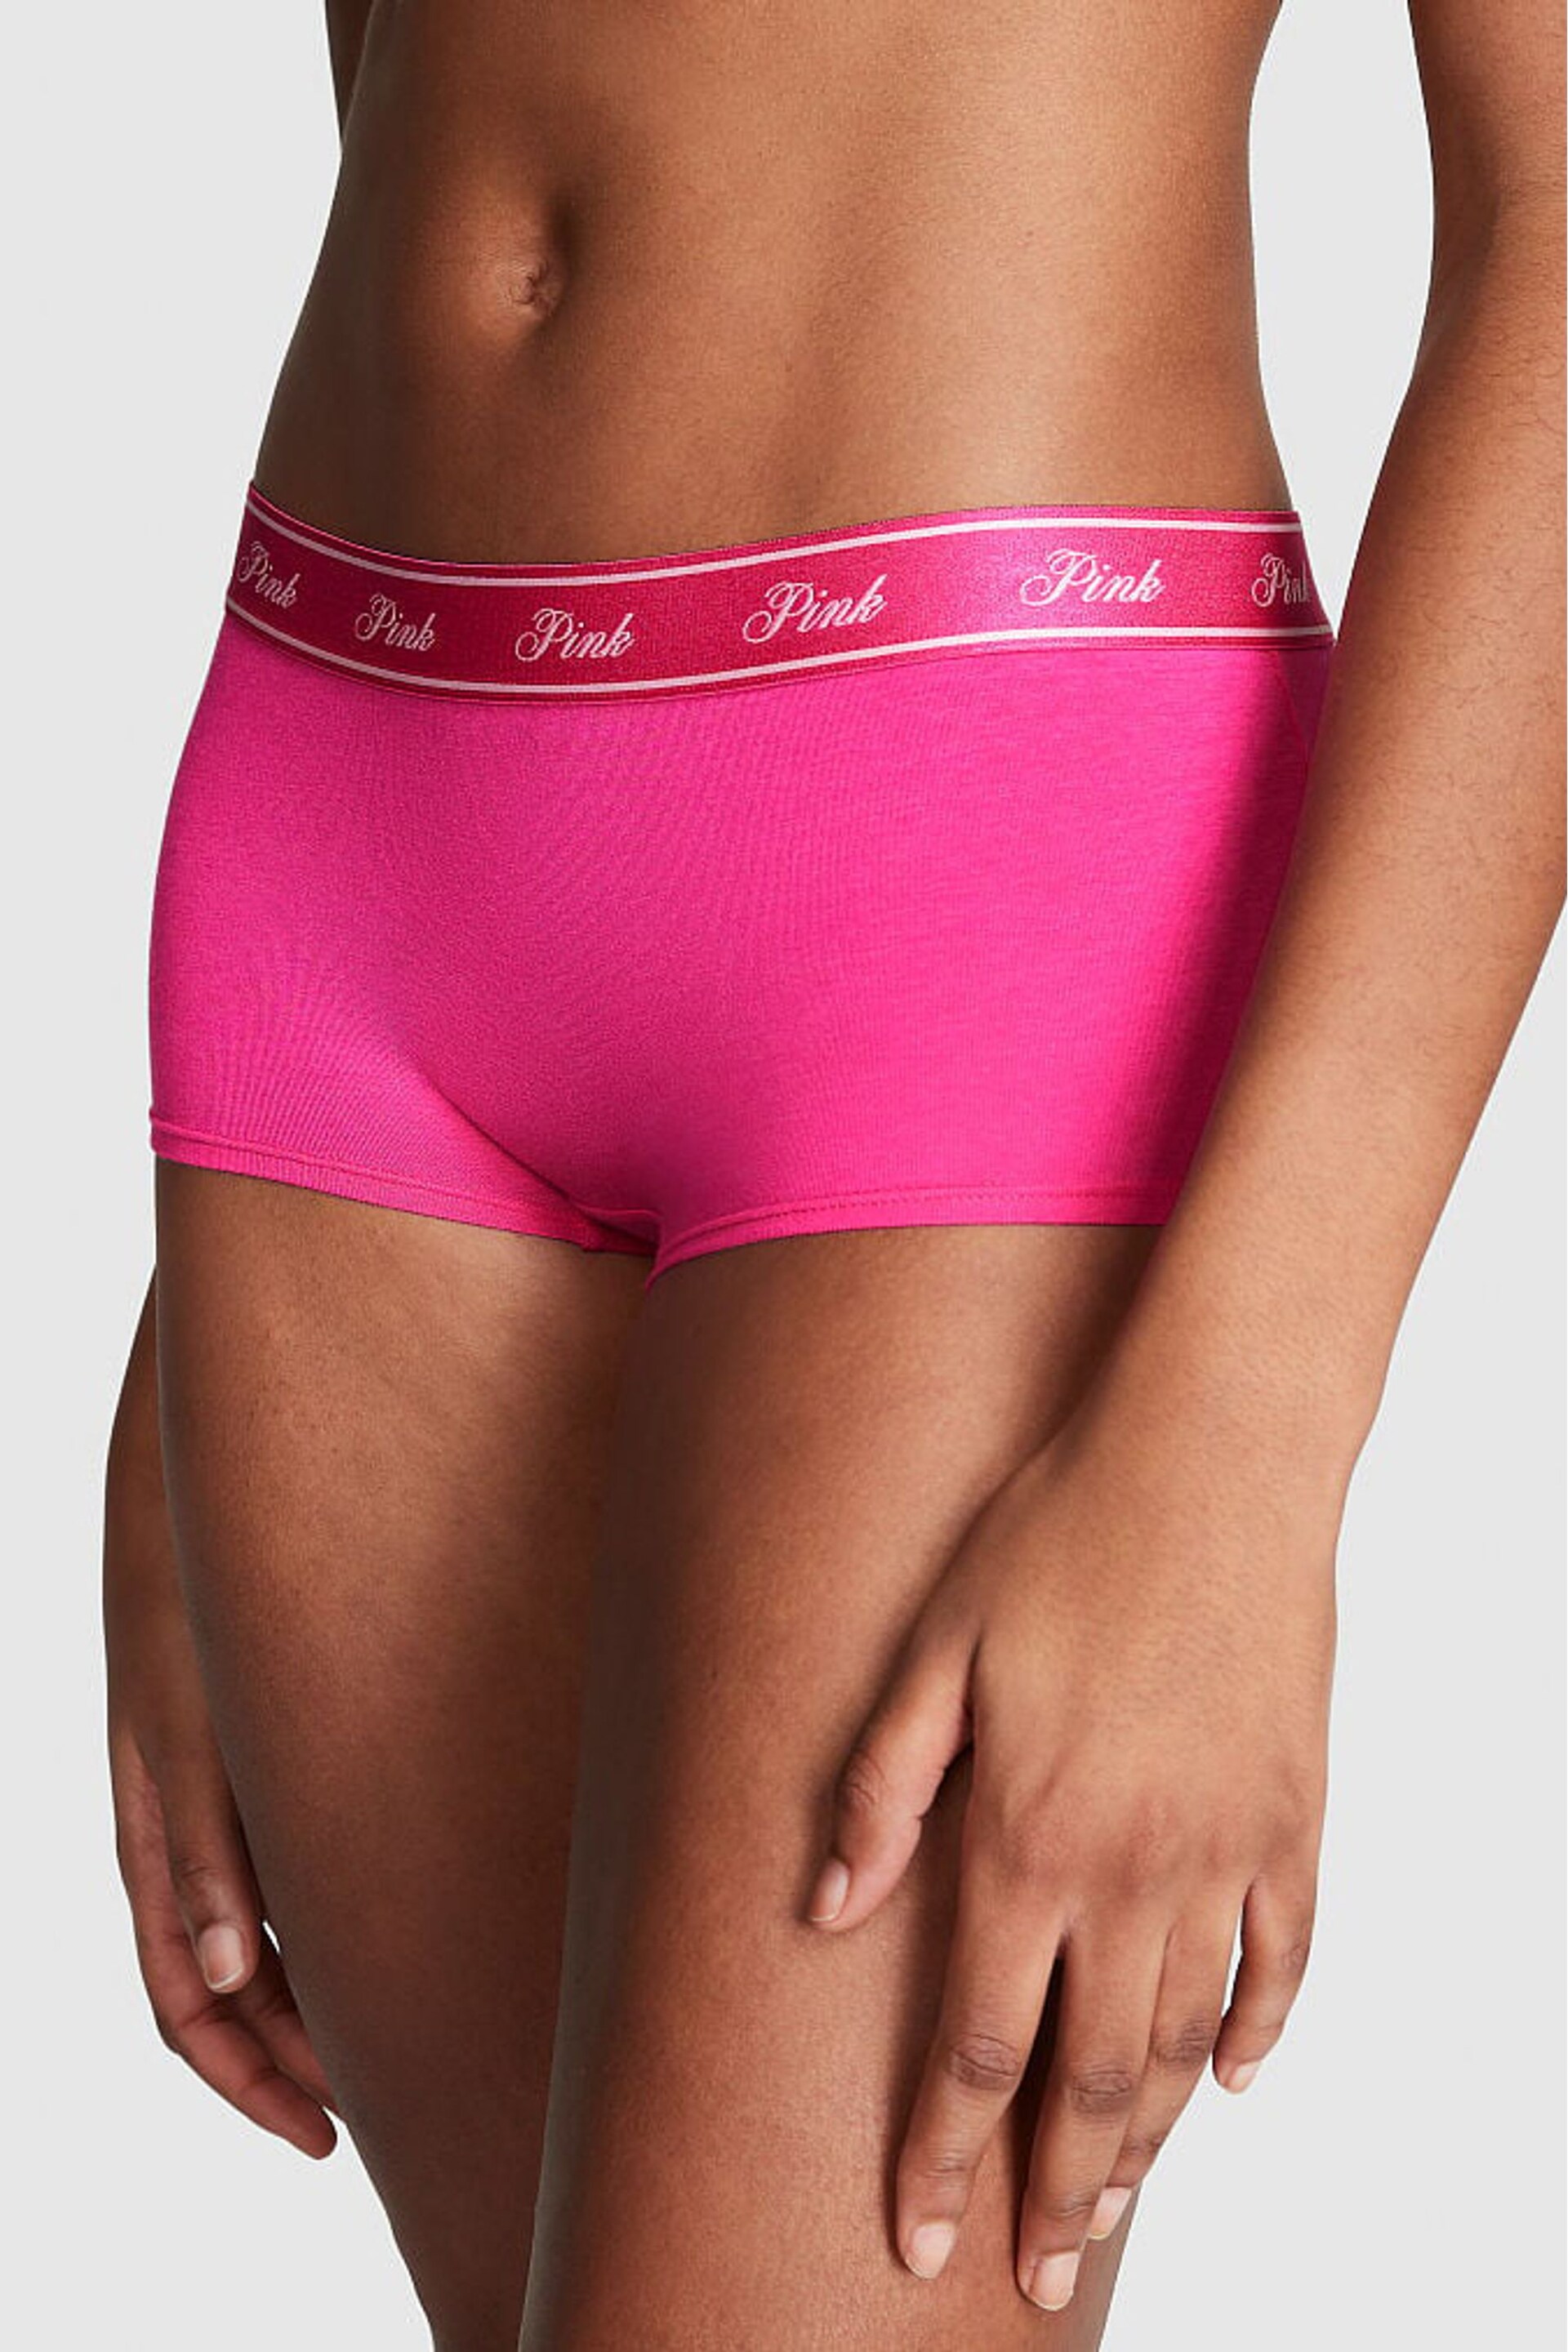 Victoria's Secret PINK Enchanted Pink Cotton Logo Boyshort Knickers - Image 1 of 3